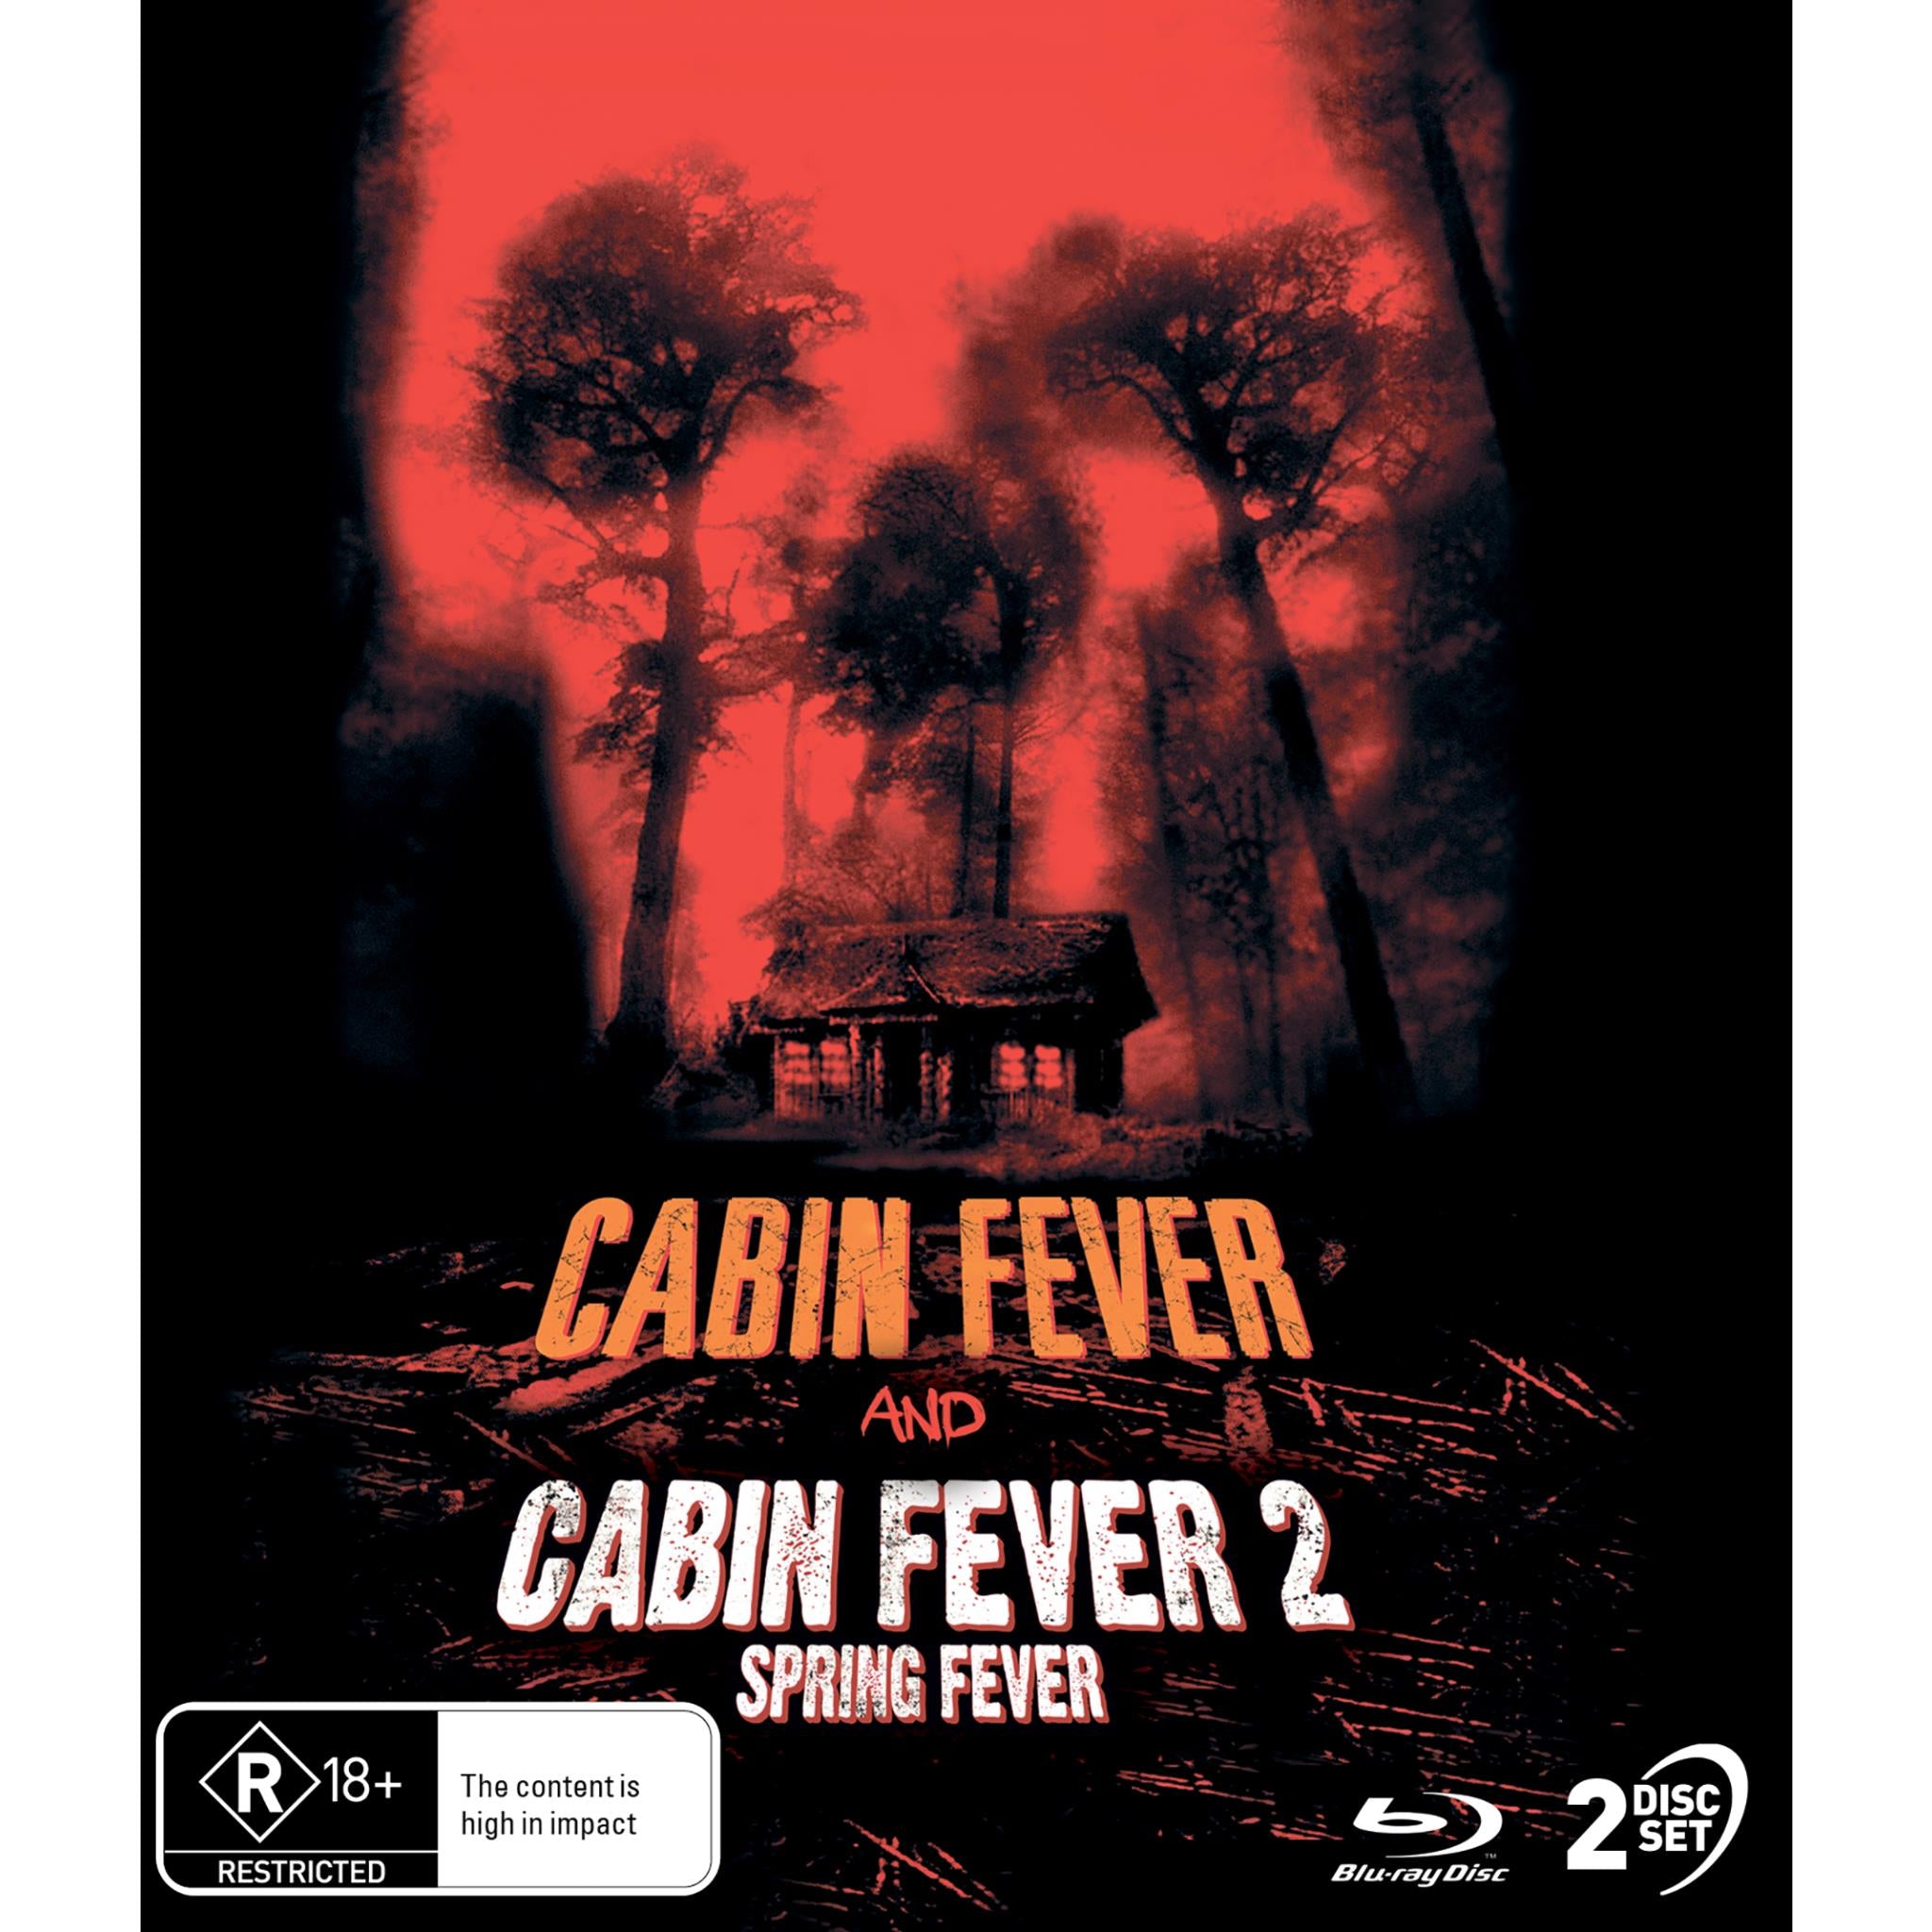 cabin fever/cabin fever 2: spring fever